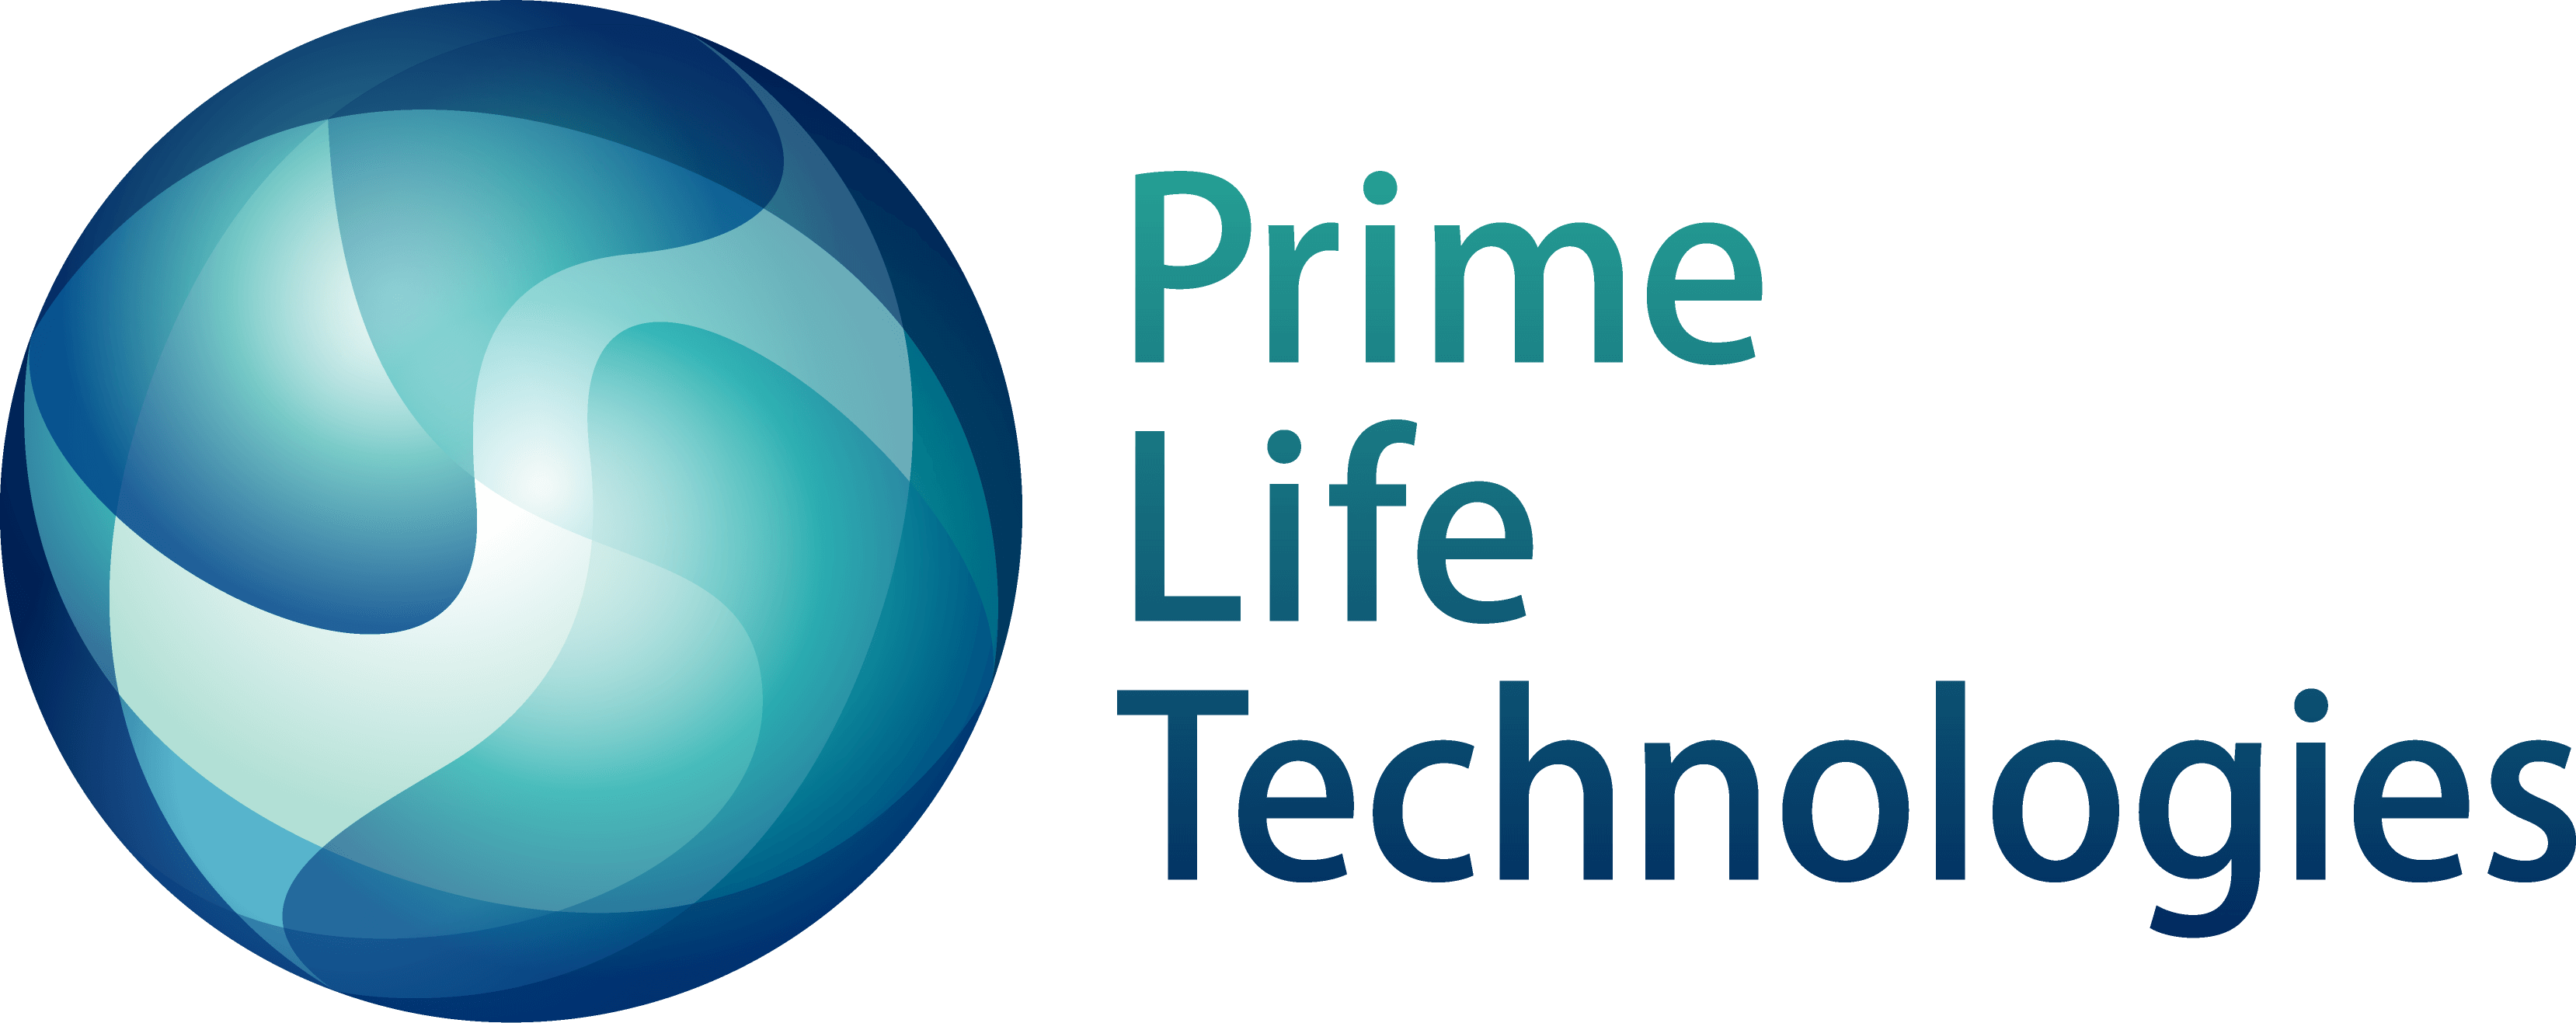 Prime Life Technologies